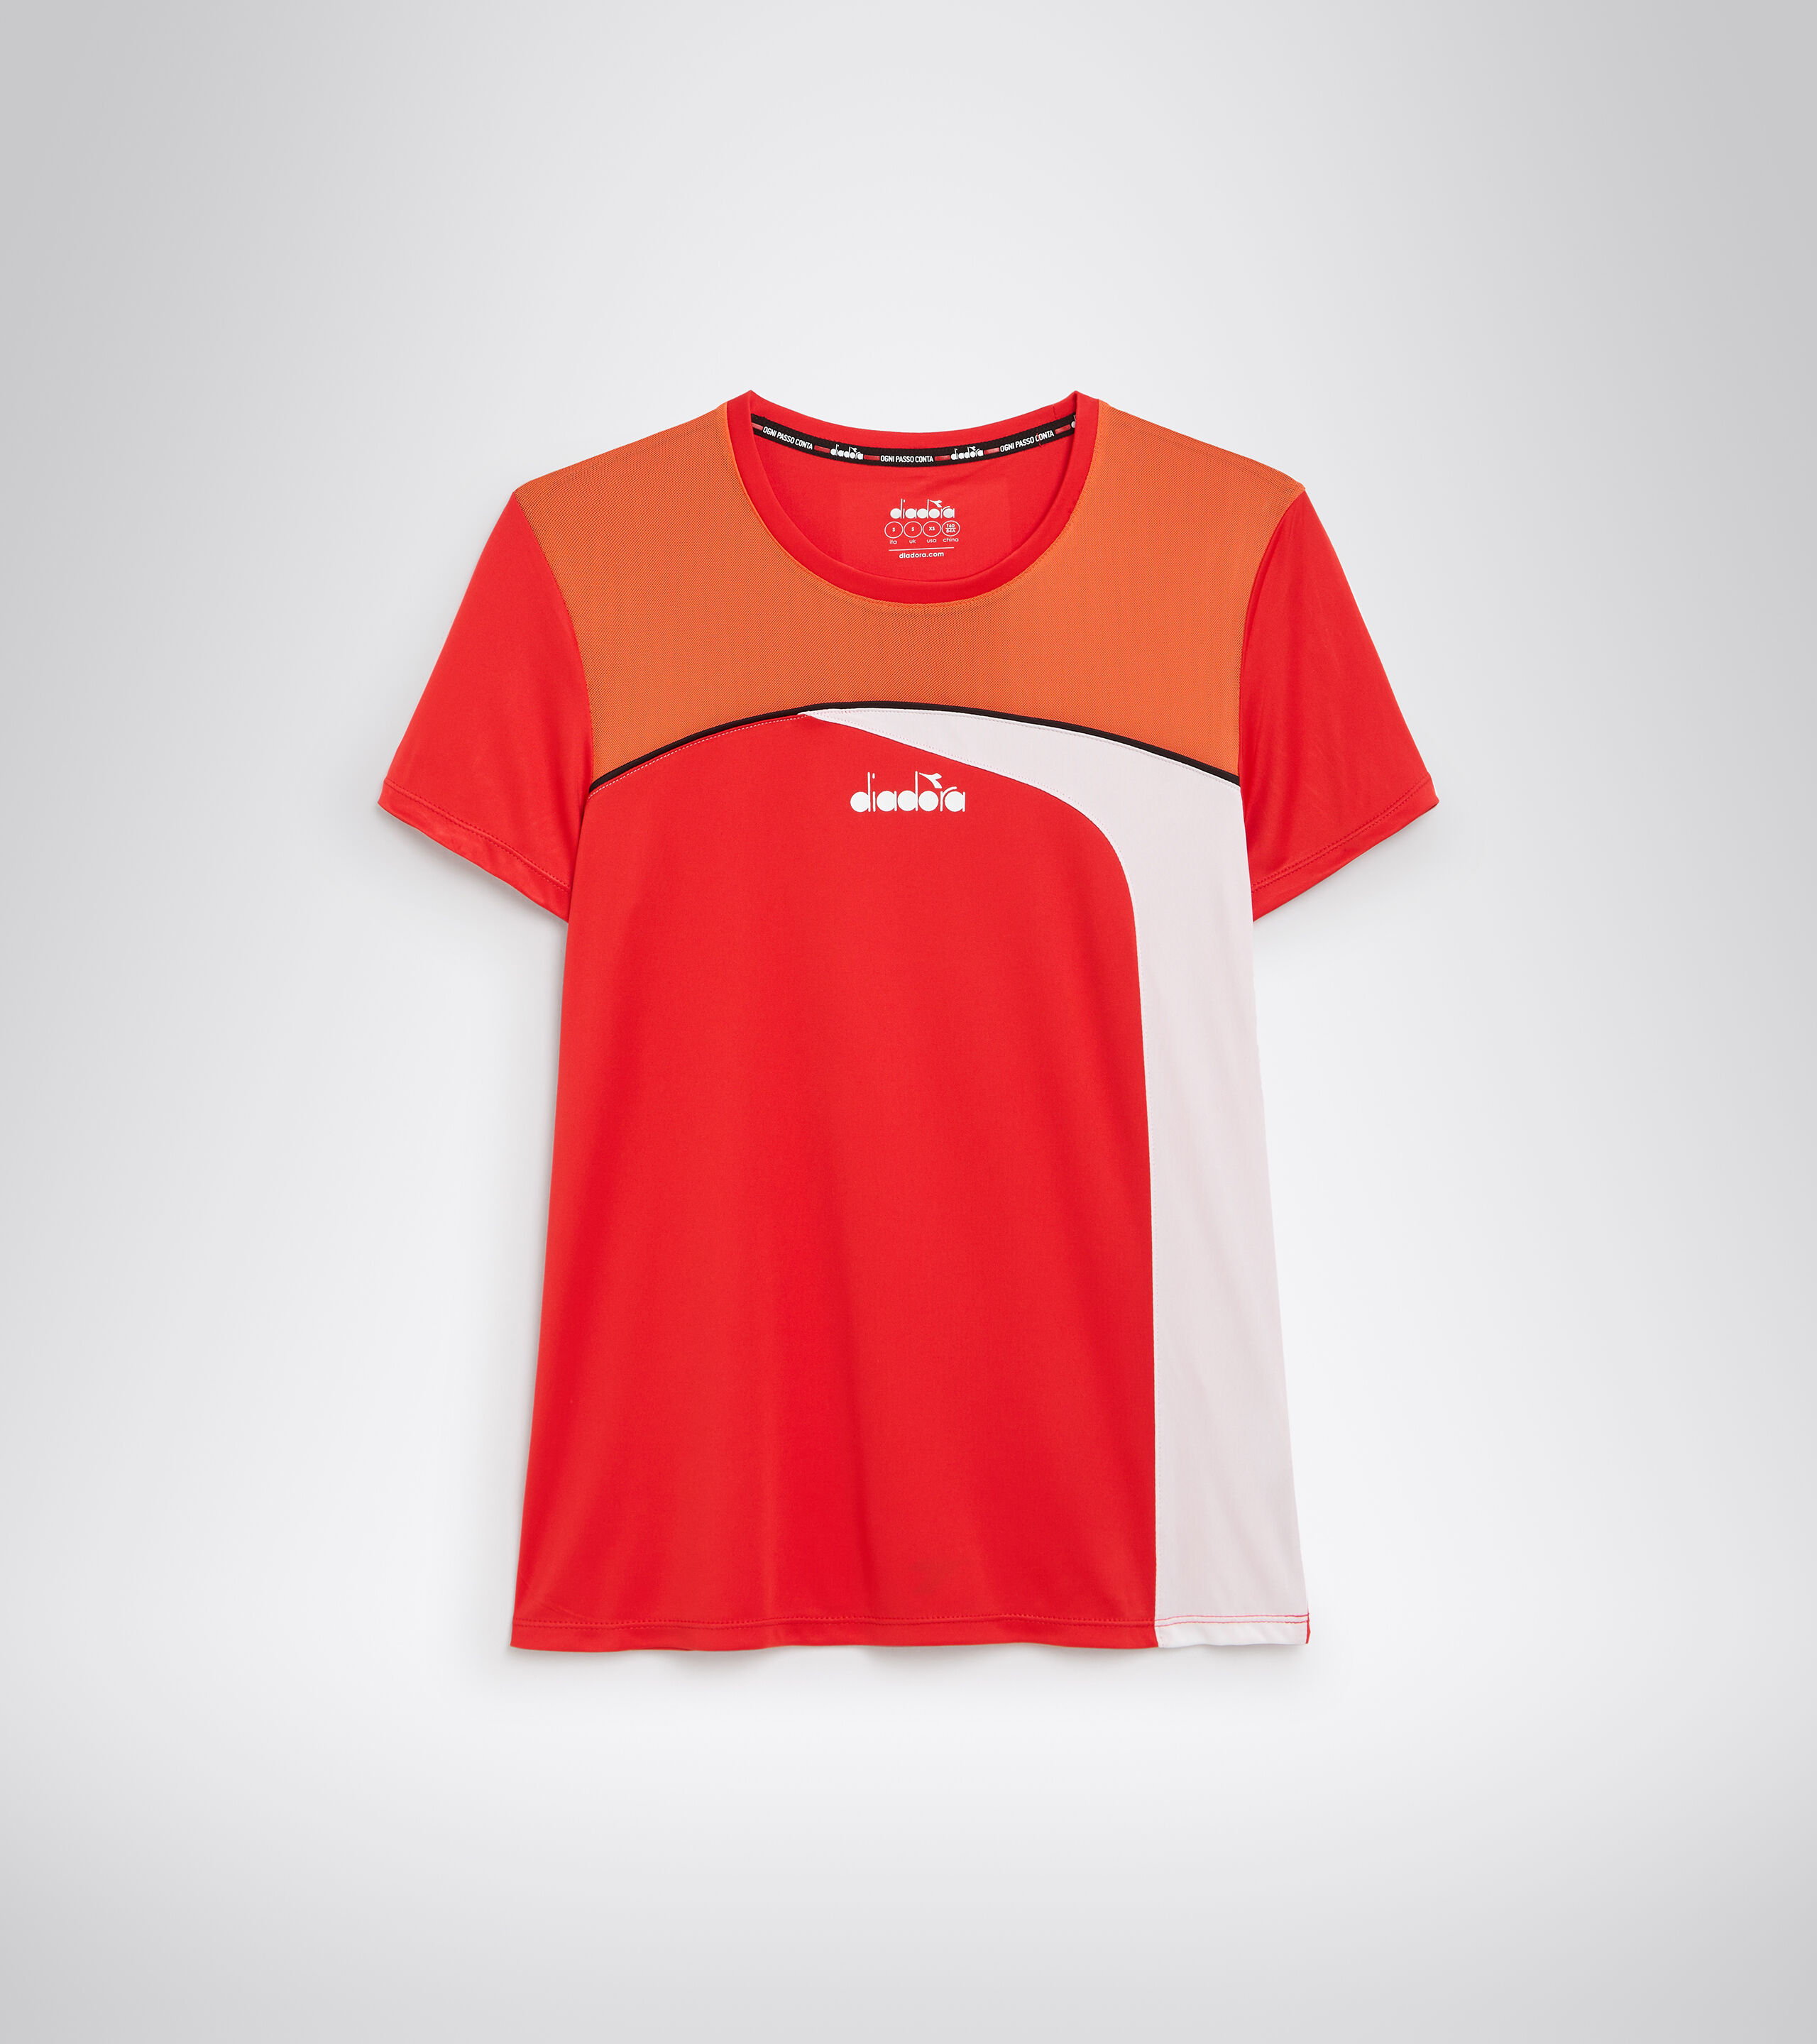 DIADORA L.BRIGHT TANK TOP Damen Lauf Shirt Trainings Fitness Shirt 102.171335 